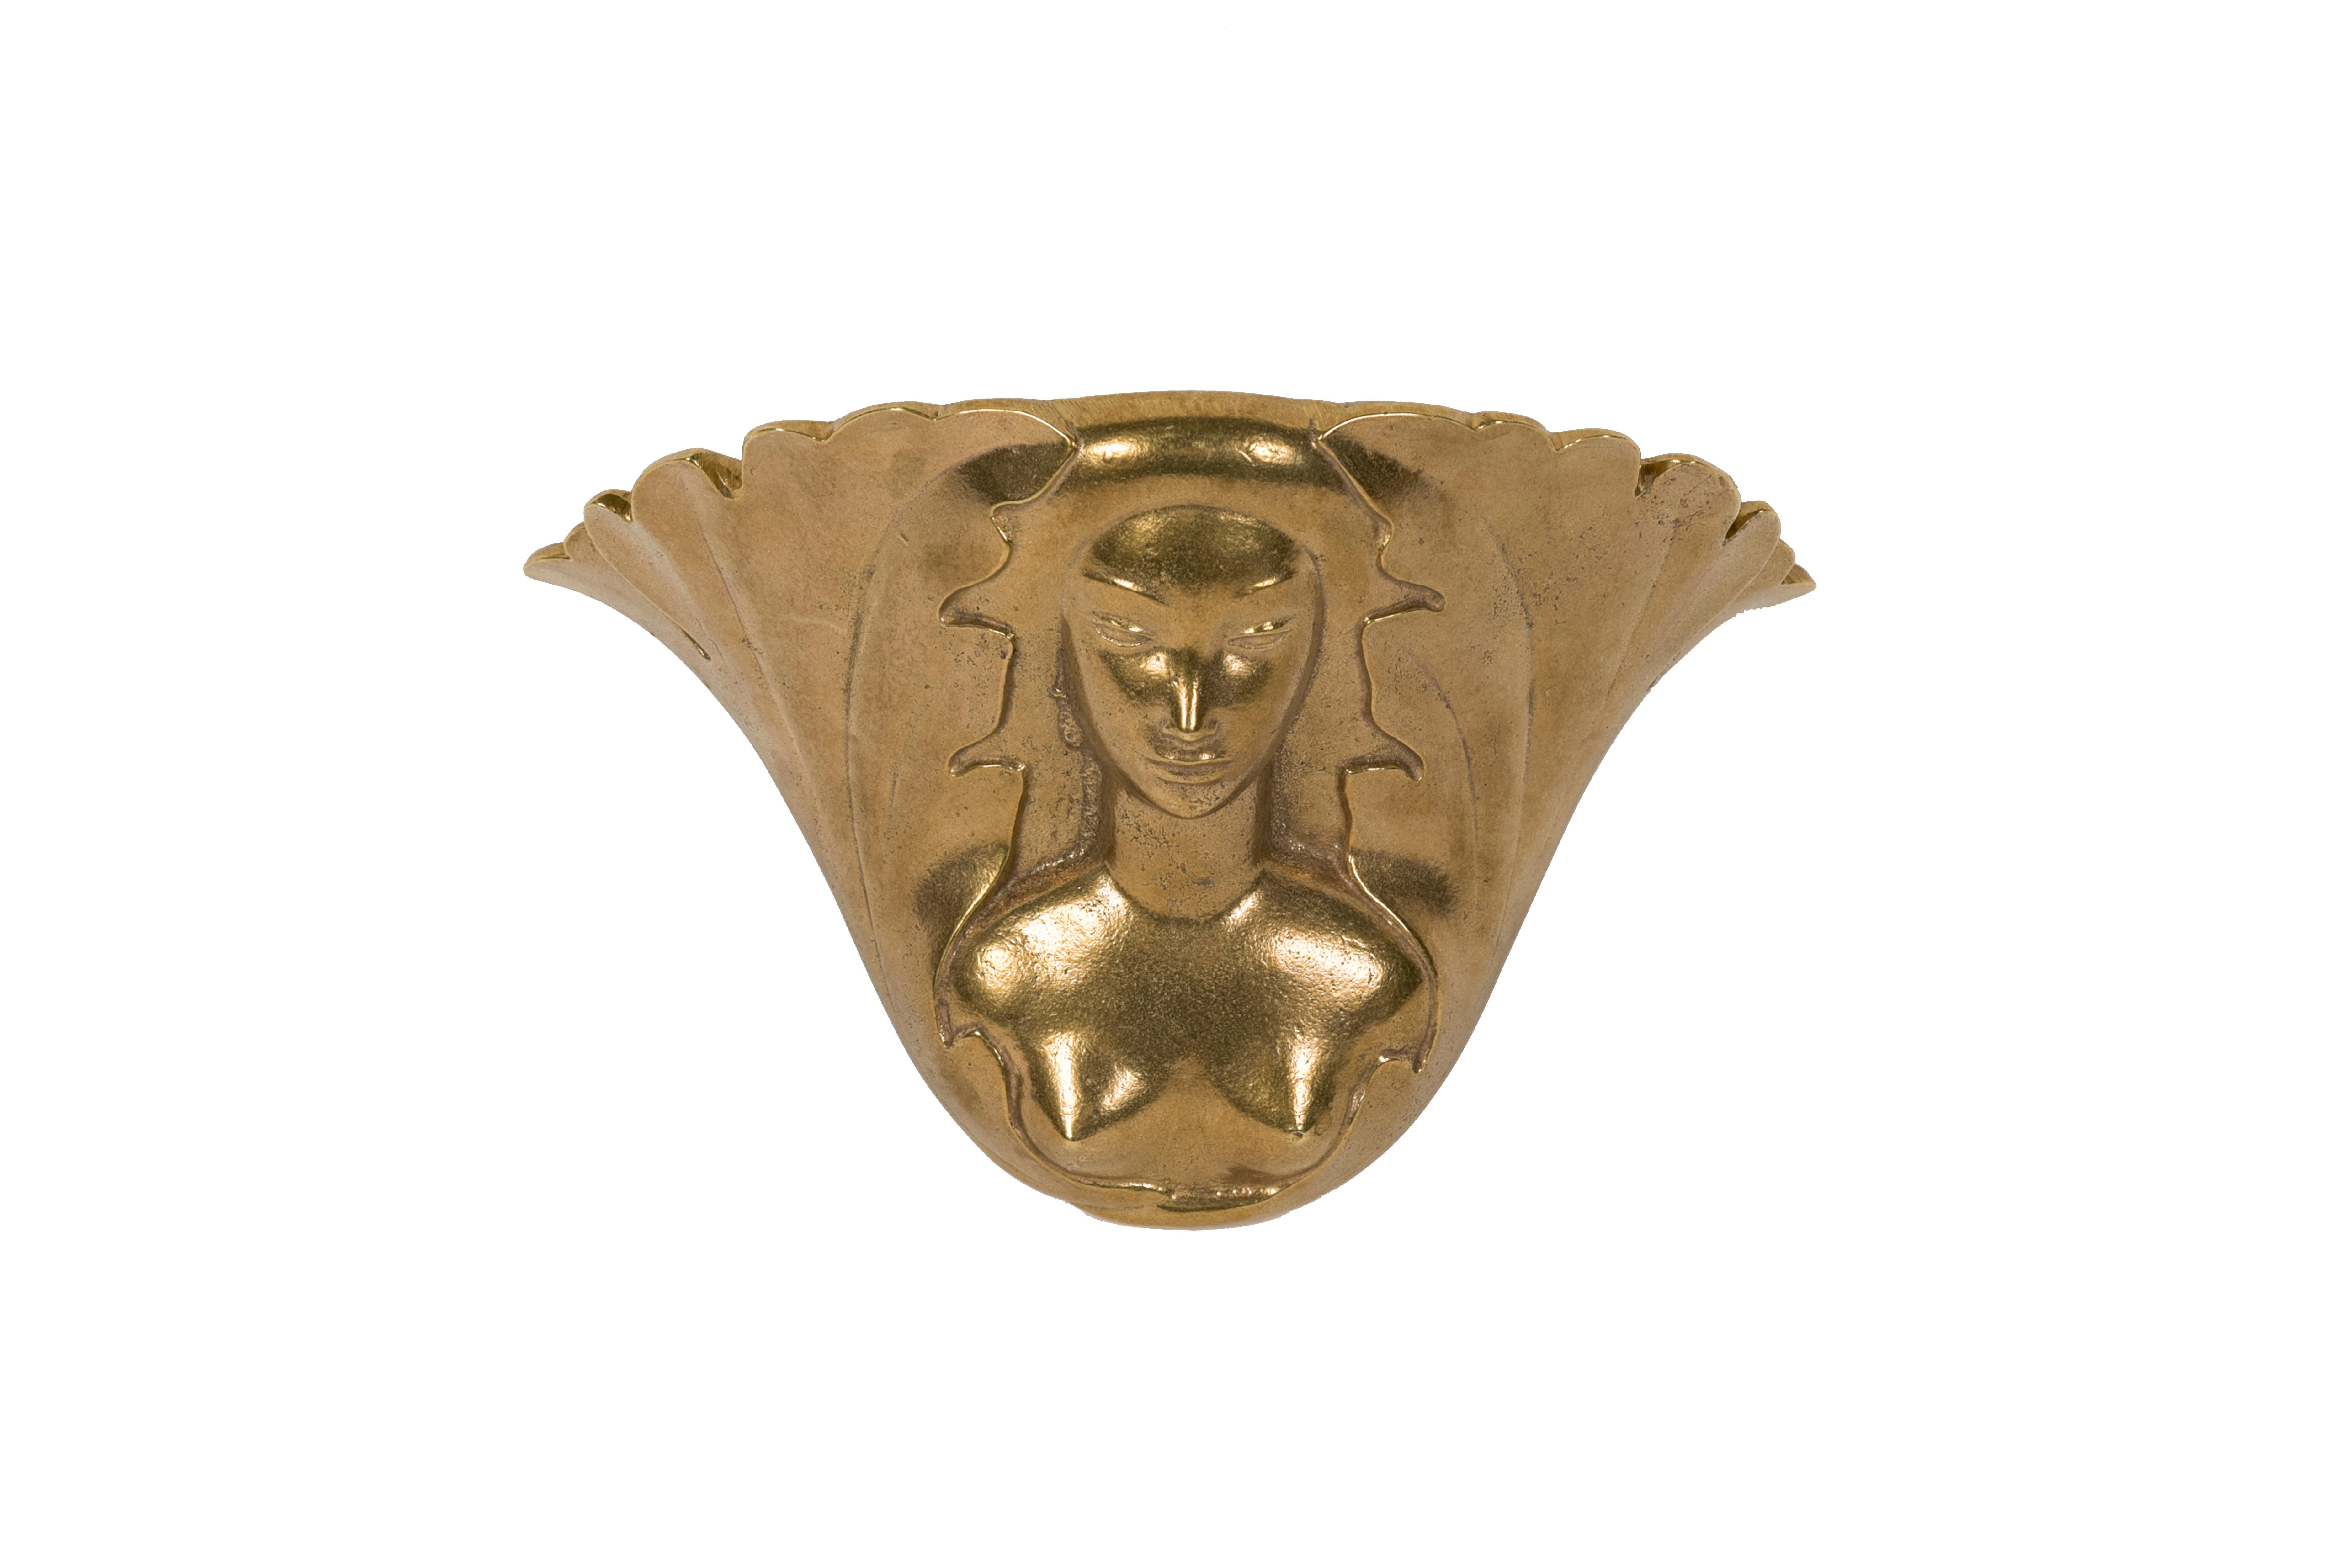 Rare pair of bronze sconces designed by Riccardo Scarpa
French sculptor
1950's.